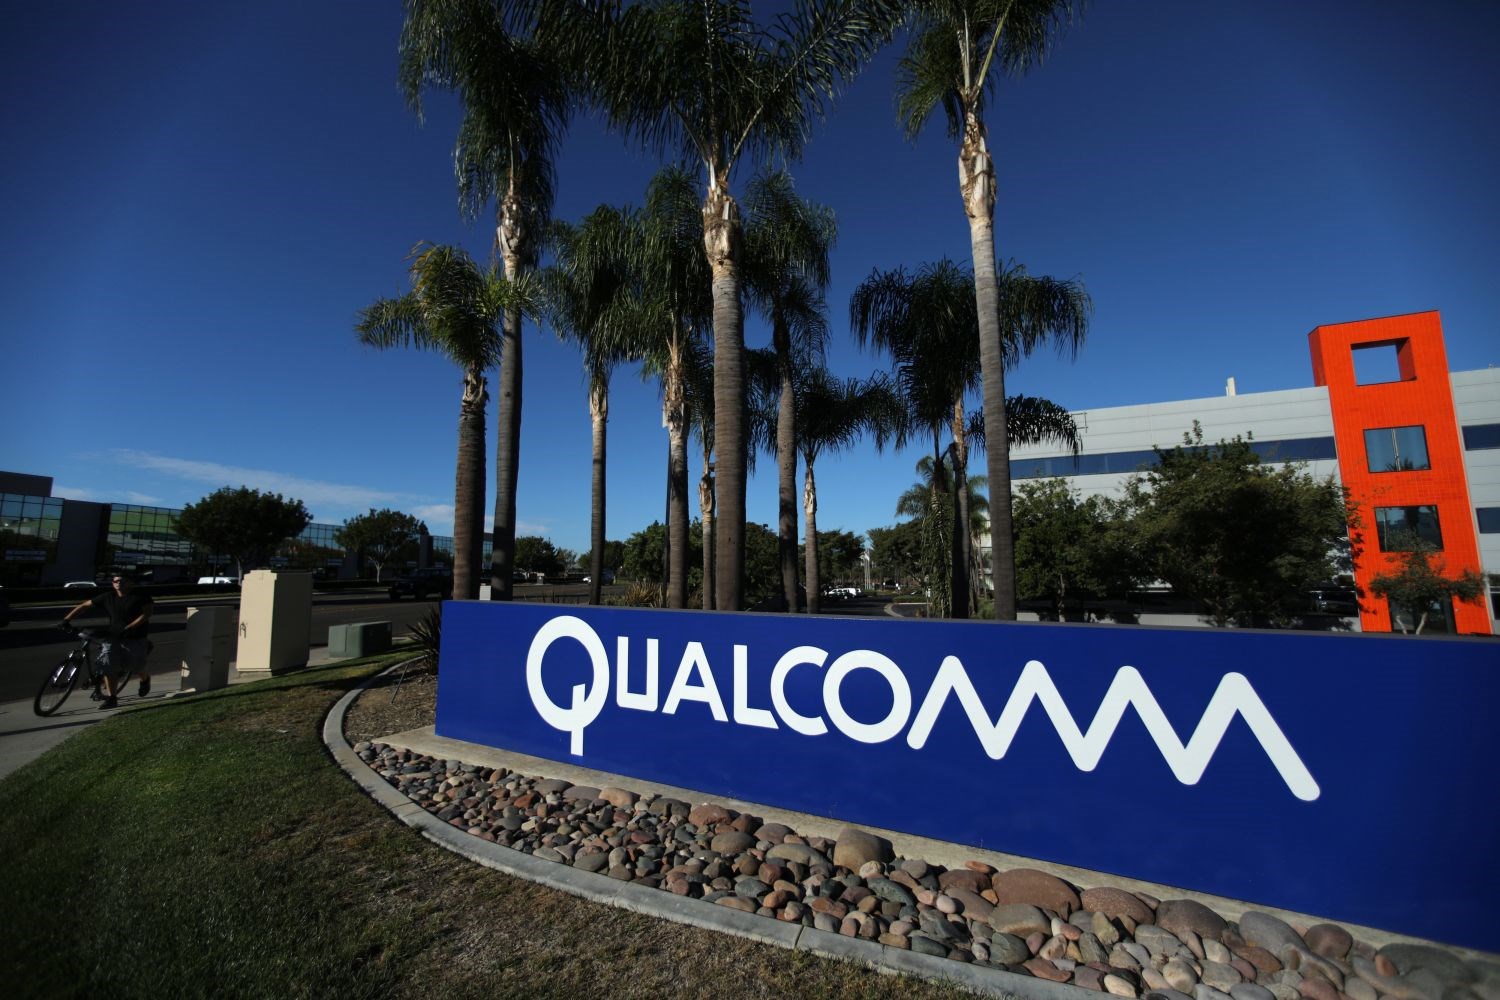 Qualcomm Snapdragon 895, %20 daha hızlı olacak